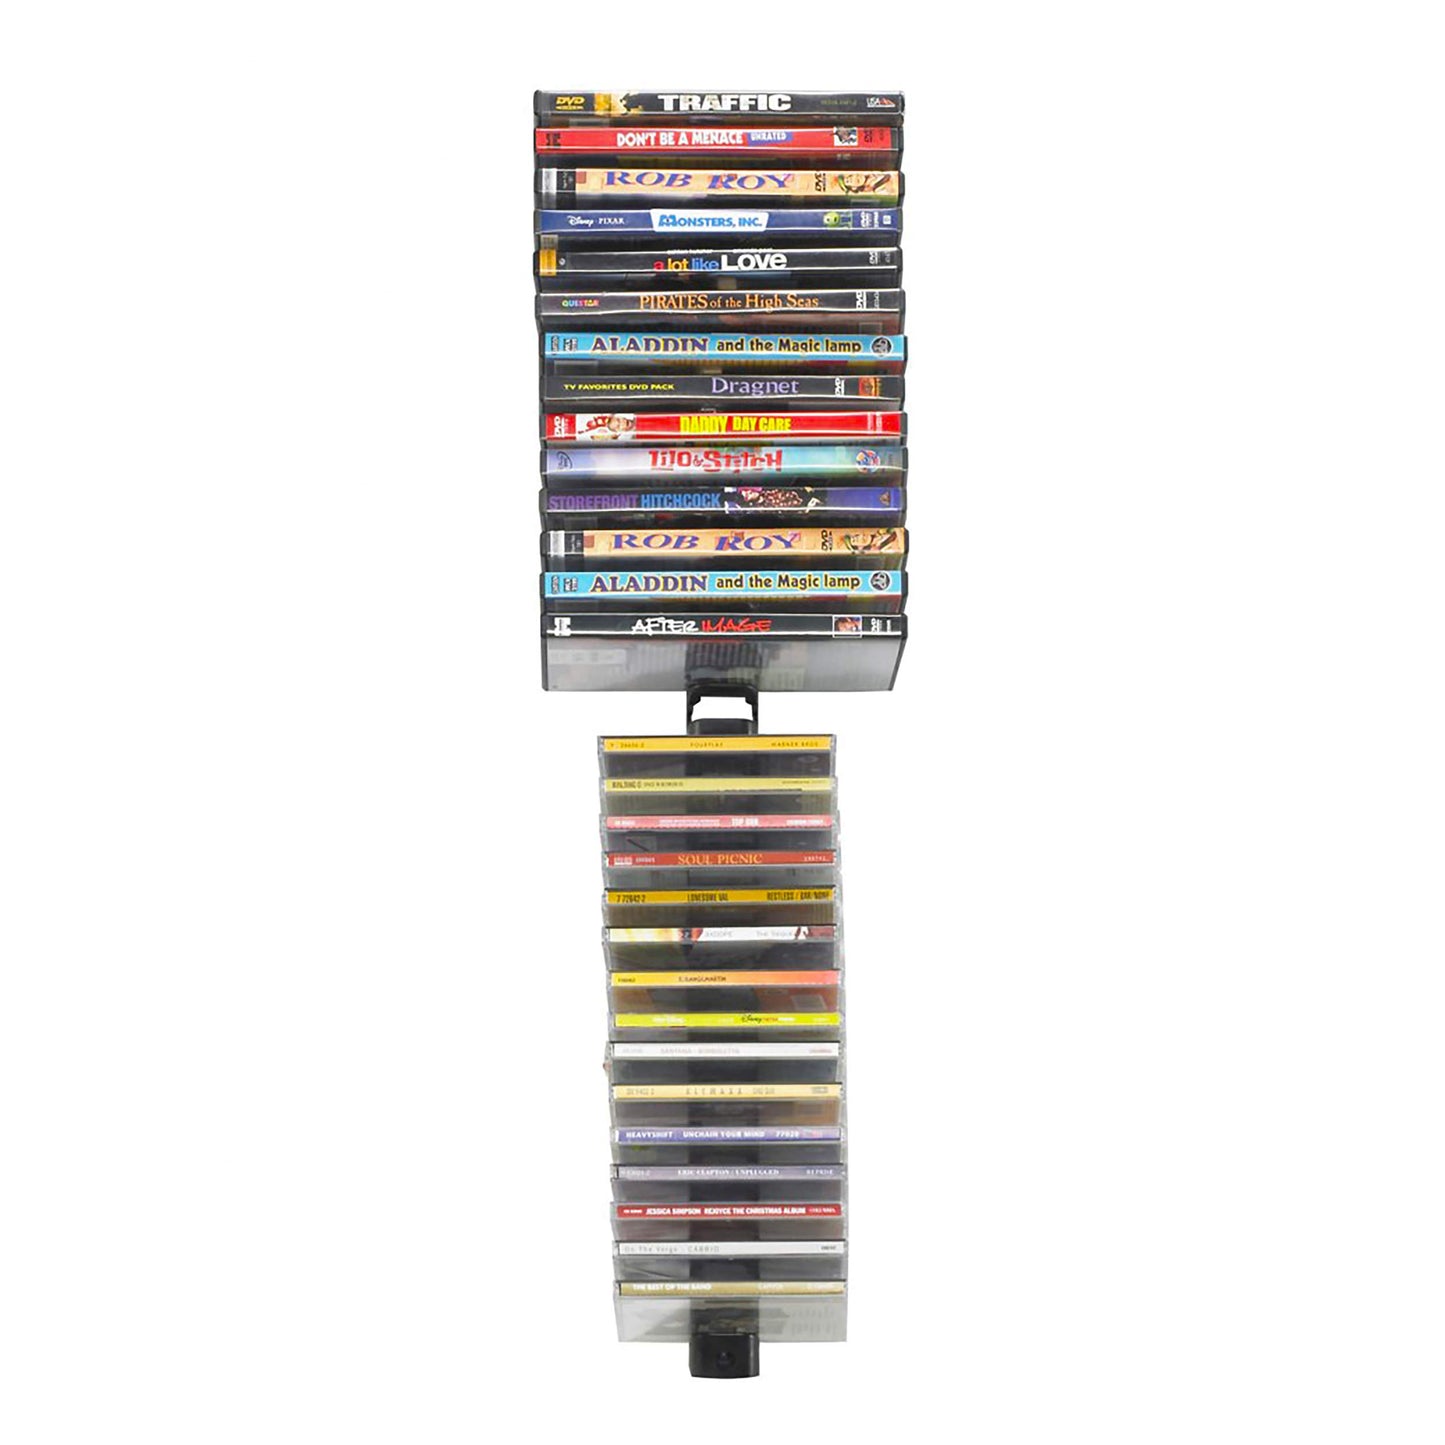 Atlantic Media Stix, Wall-Mount CD/DVD Media Storage Rack, 4-pack PN 62735674 in Black